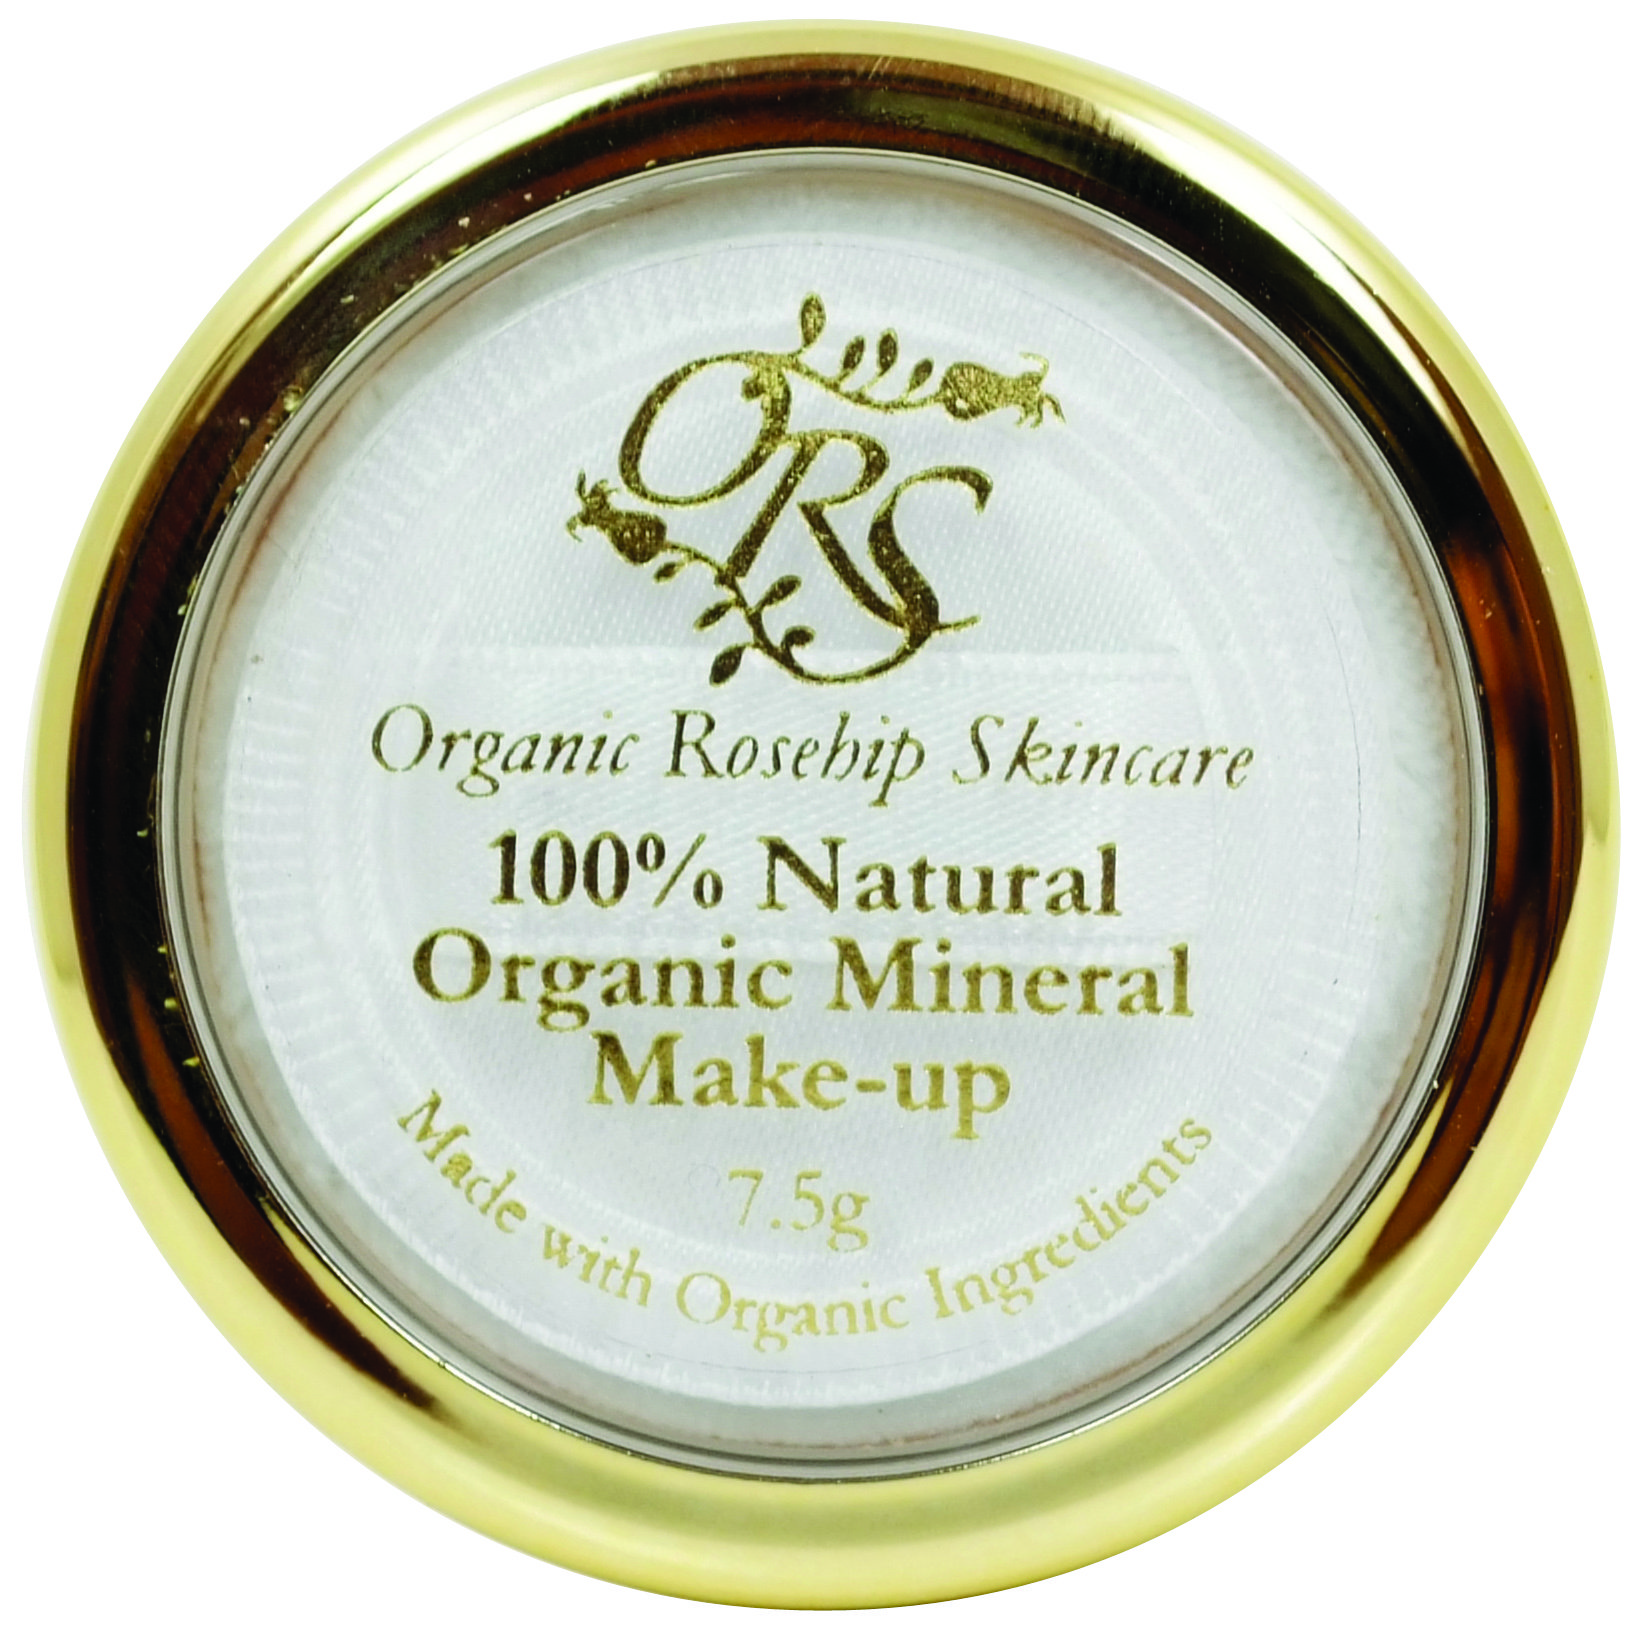 Organic Rosehip Skincare - Radiant Beauty with Organic Makeup